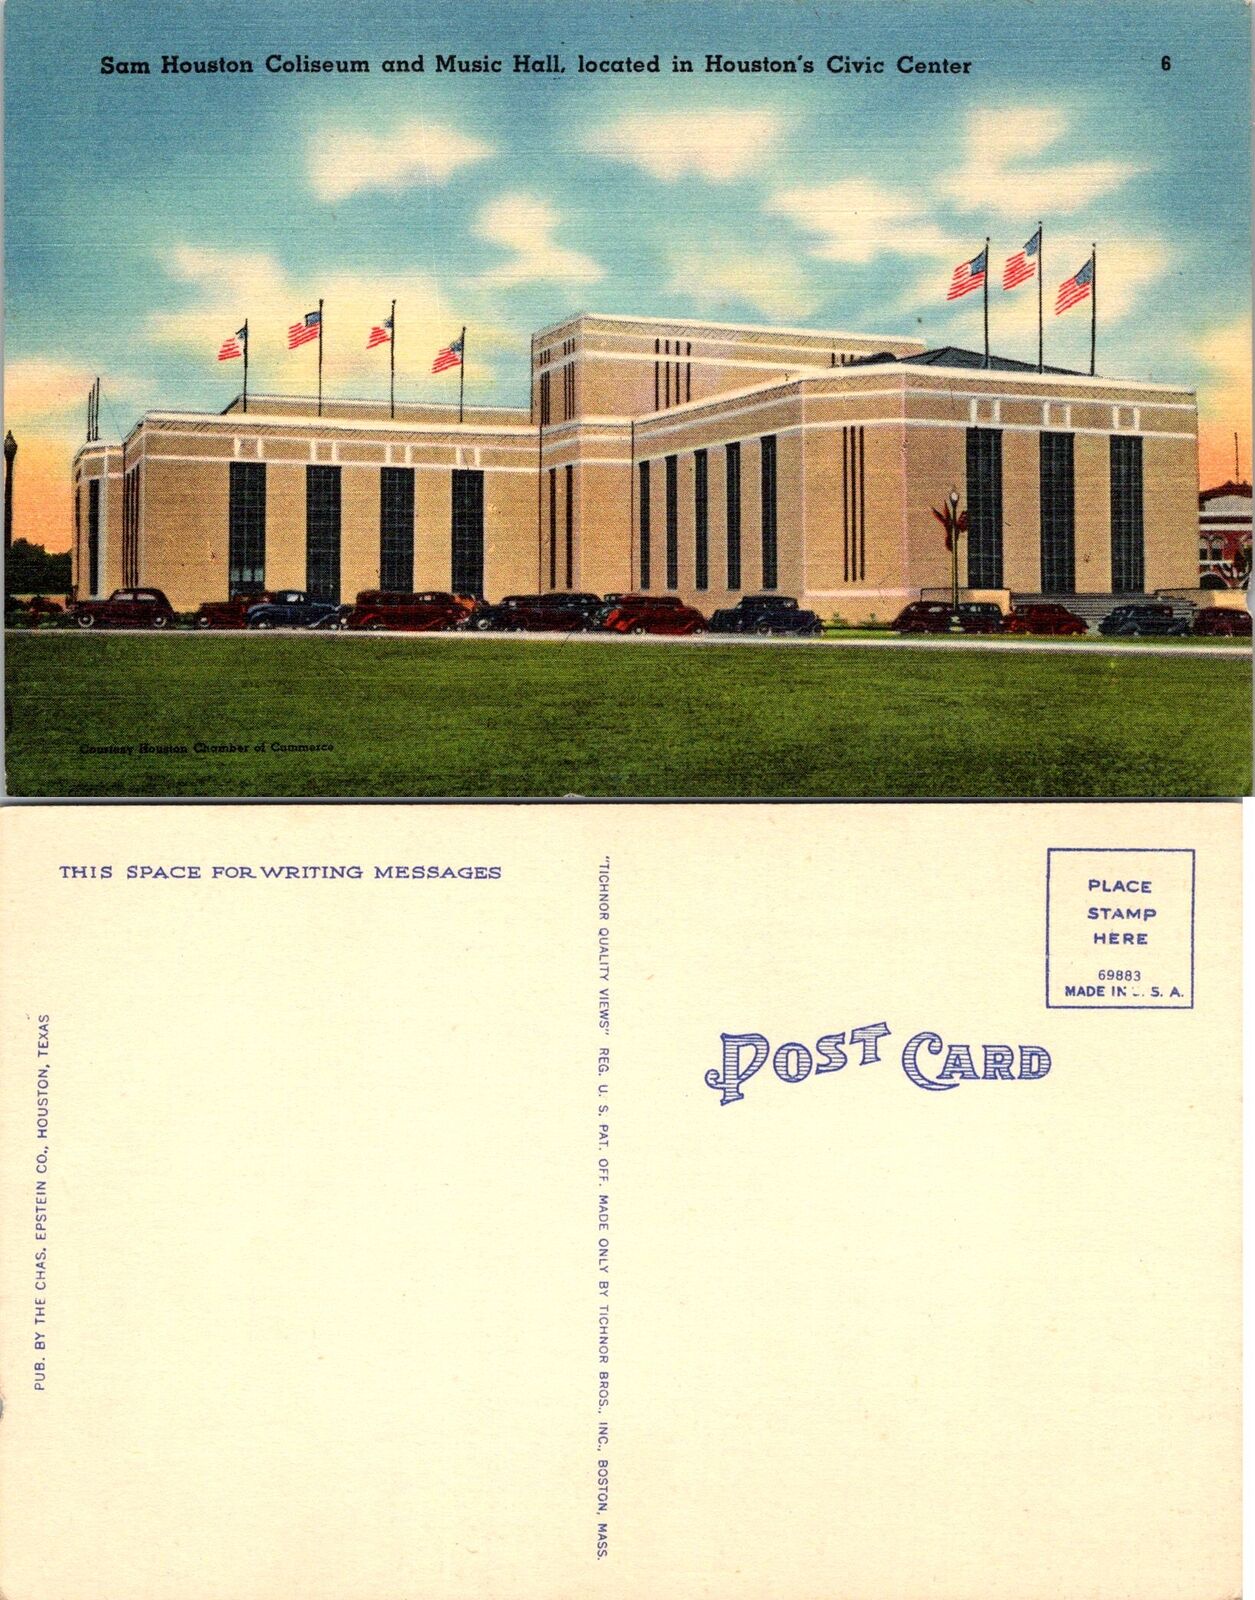 Houston Texas SAM HOUSTON COLISEUM AND MUSIC HALL Postcard i399